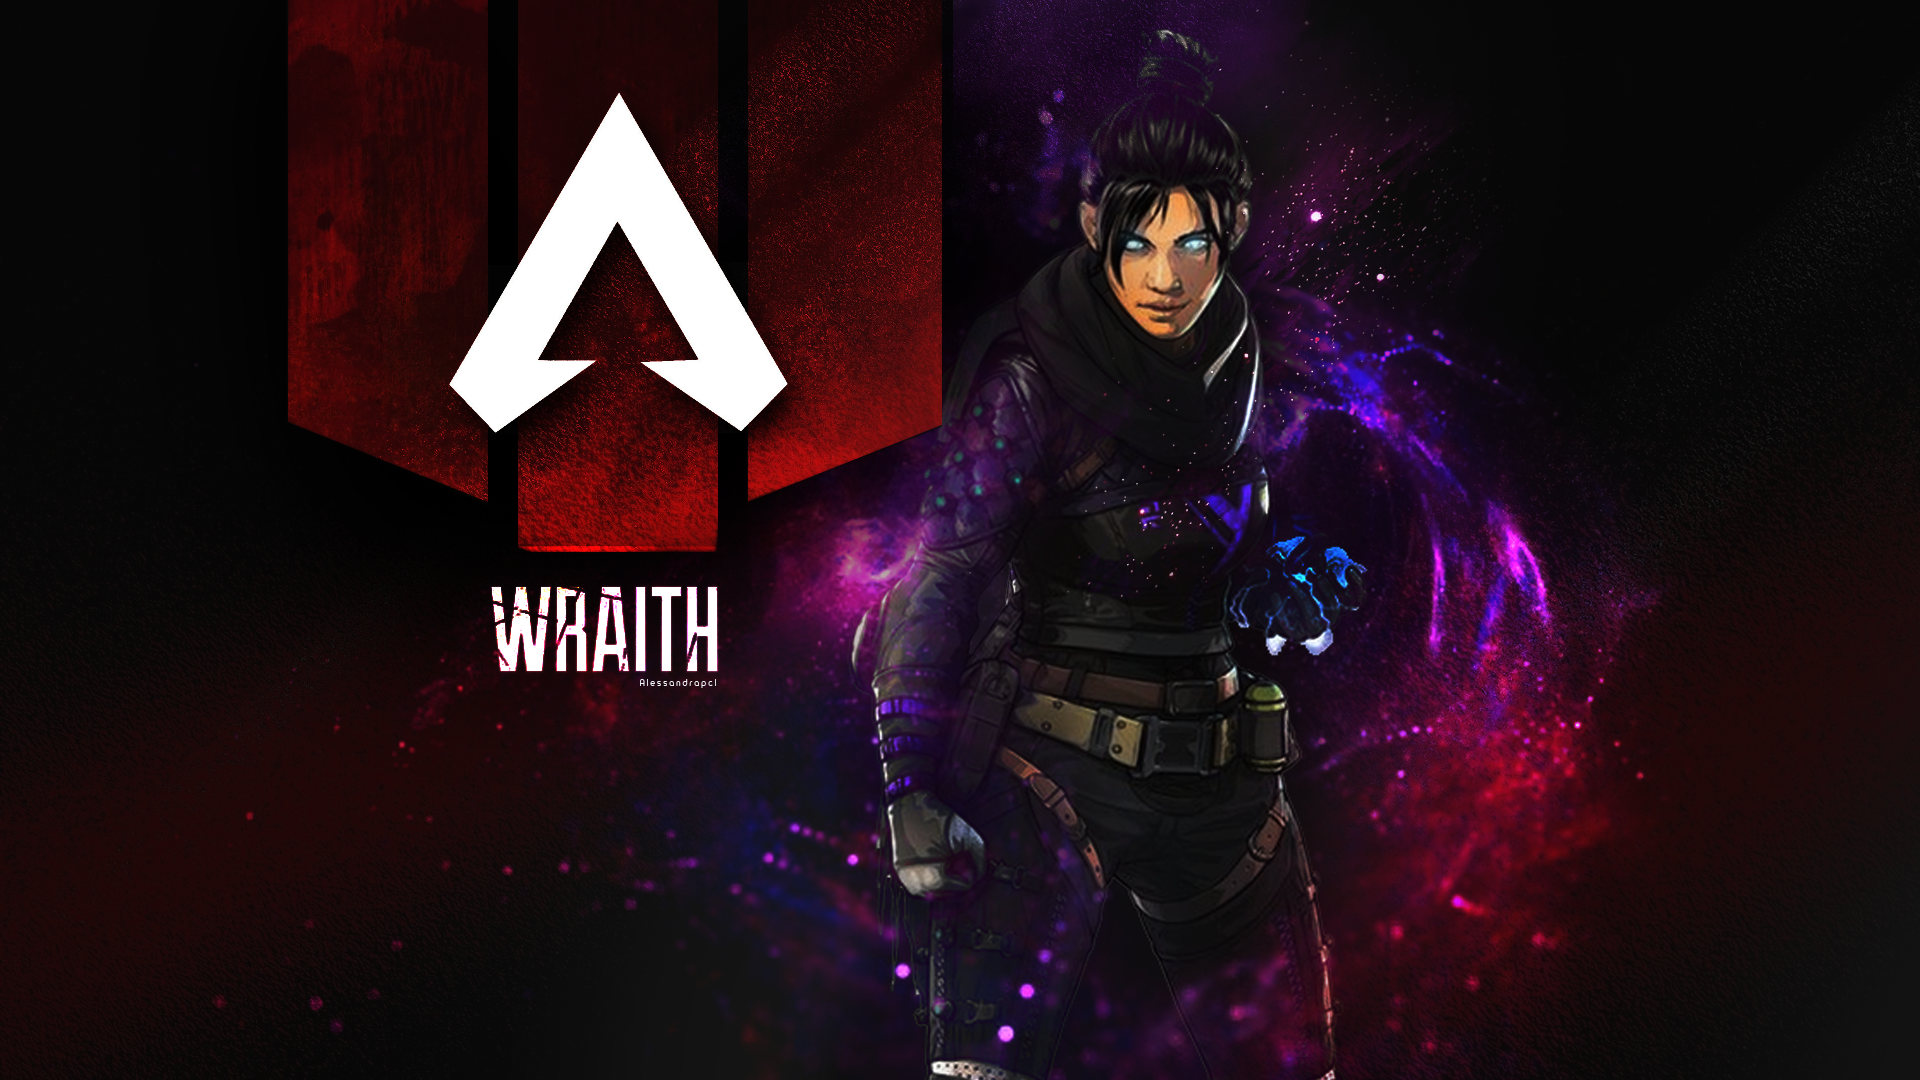 Wraith Apex Legends! #FanArt instagram